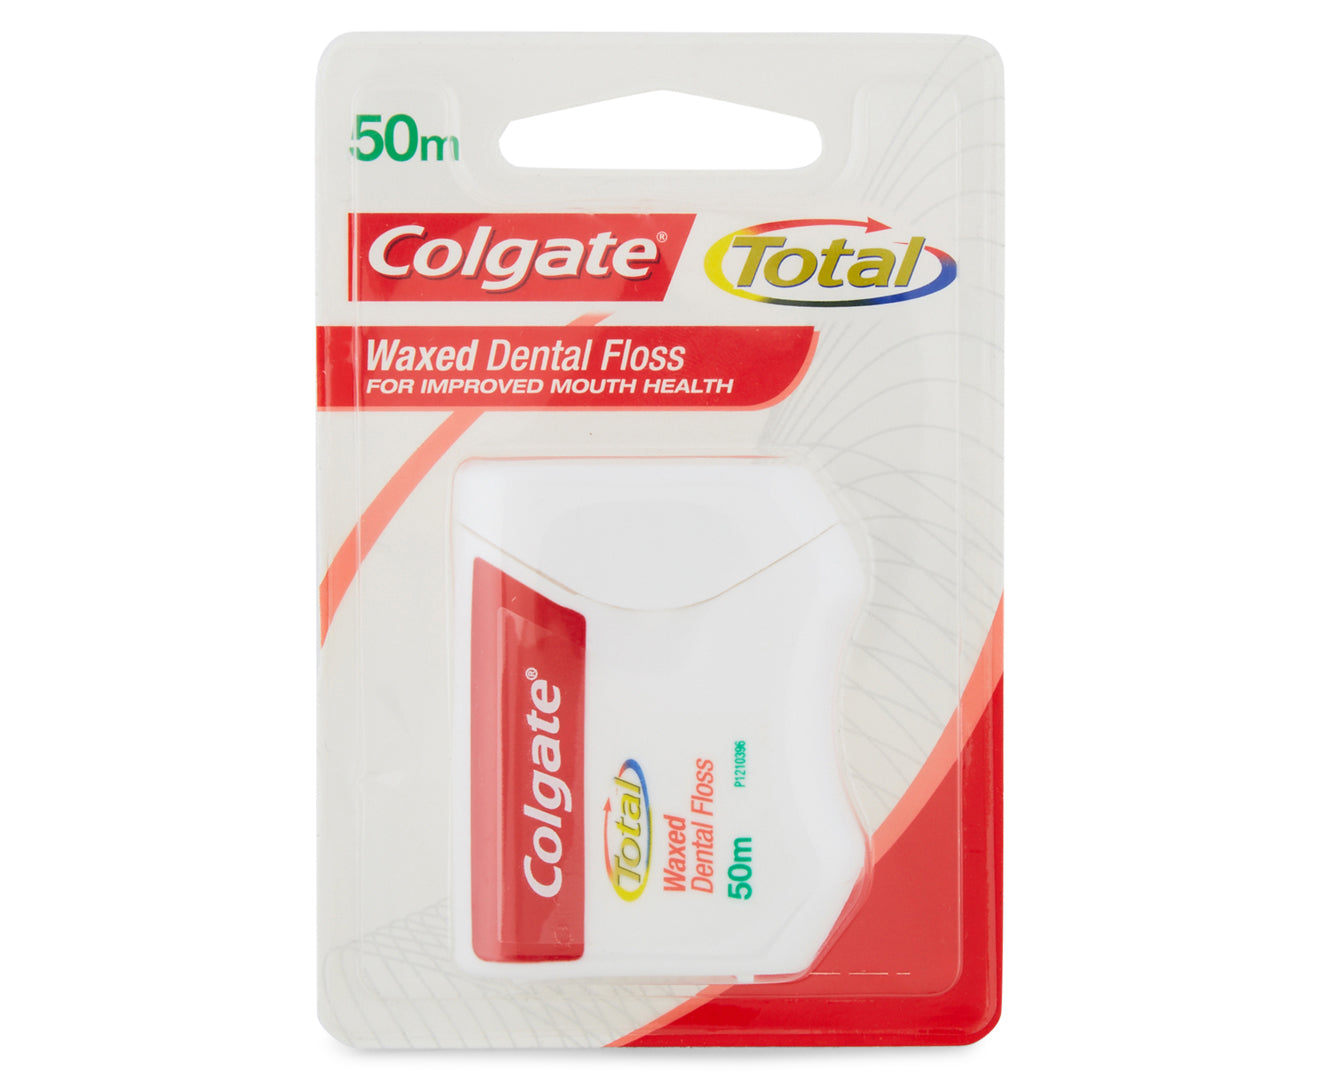 Colgate Waxed Dental Floss 50m